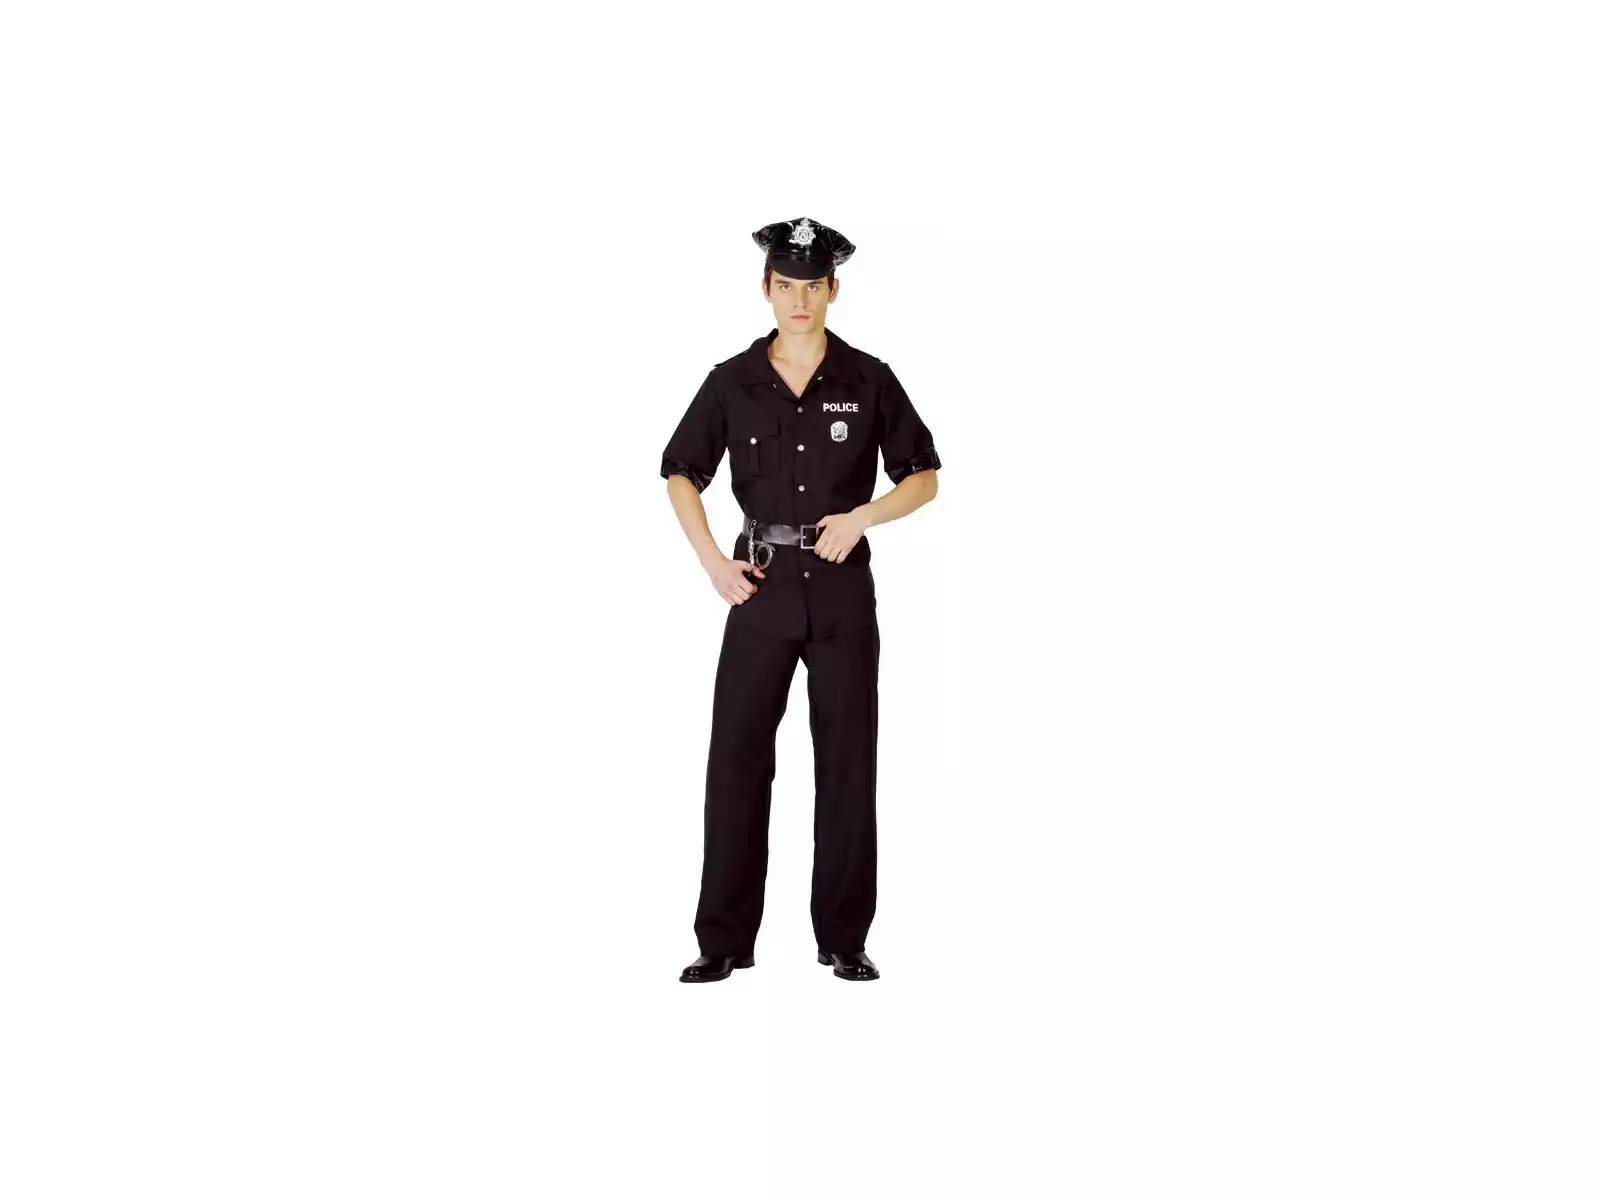 Disfraz Policia Mujer Talla L - Juguetilandia